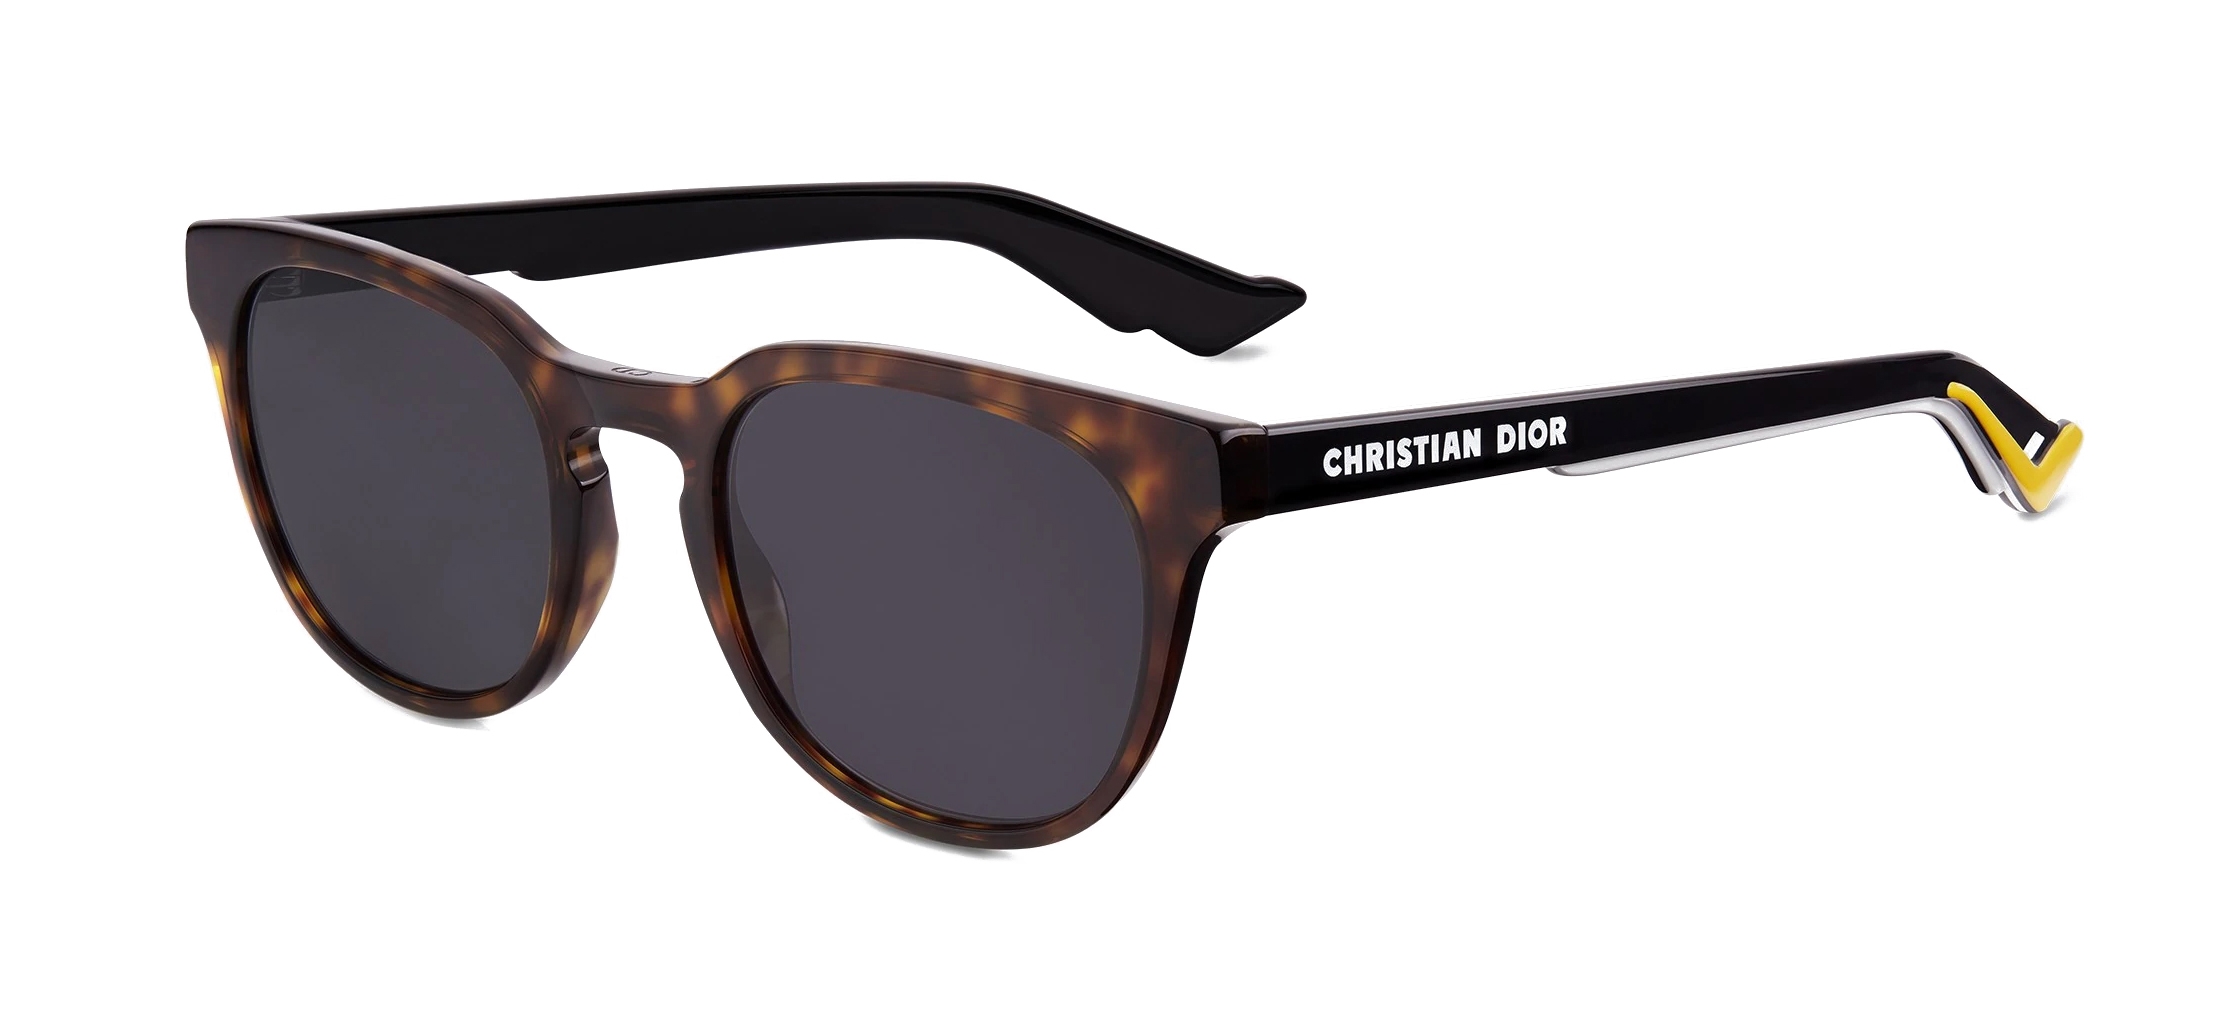 christian dior tortoise shell sunglasses